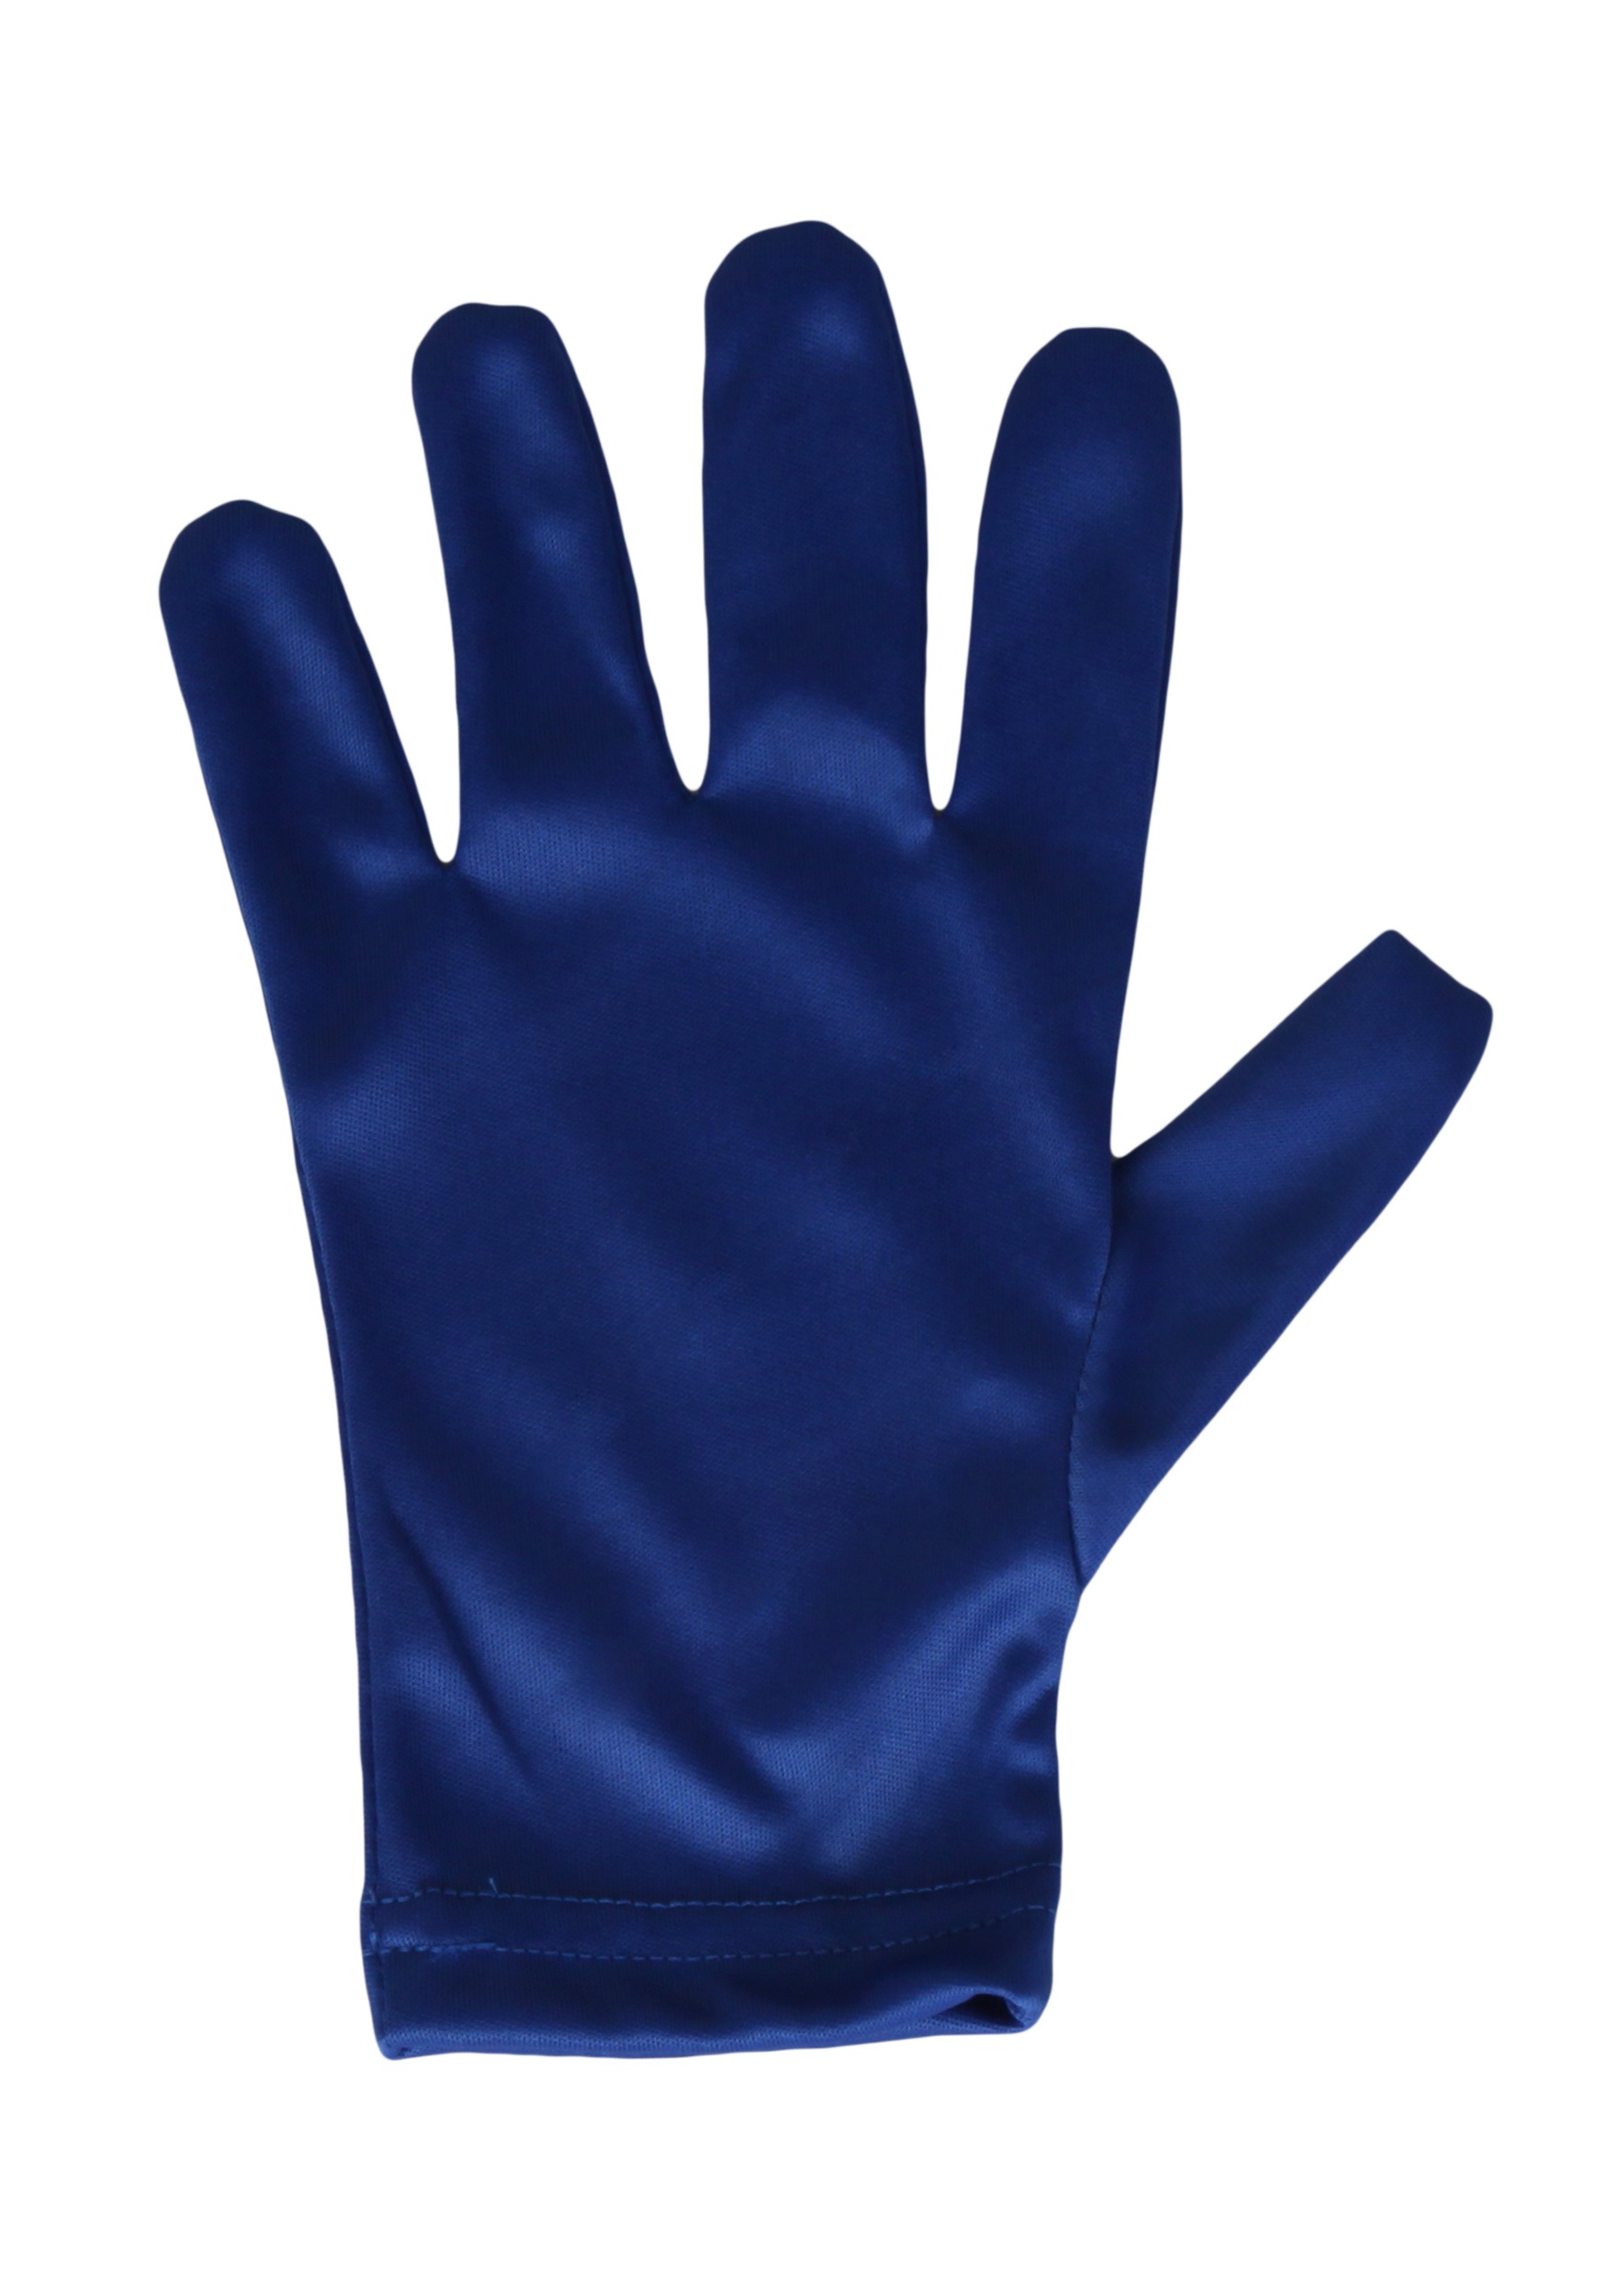 Child Blue Gloves buy now